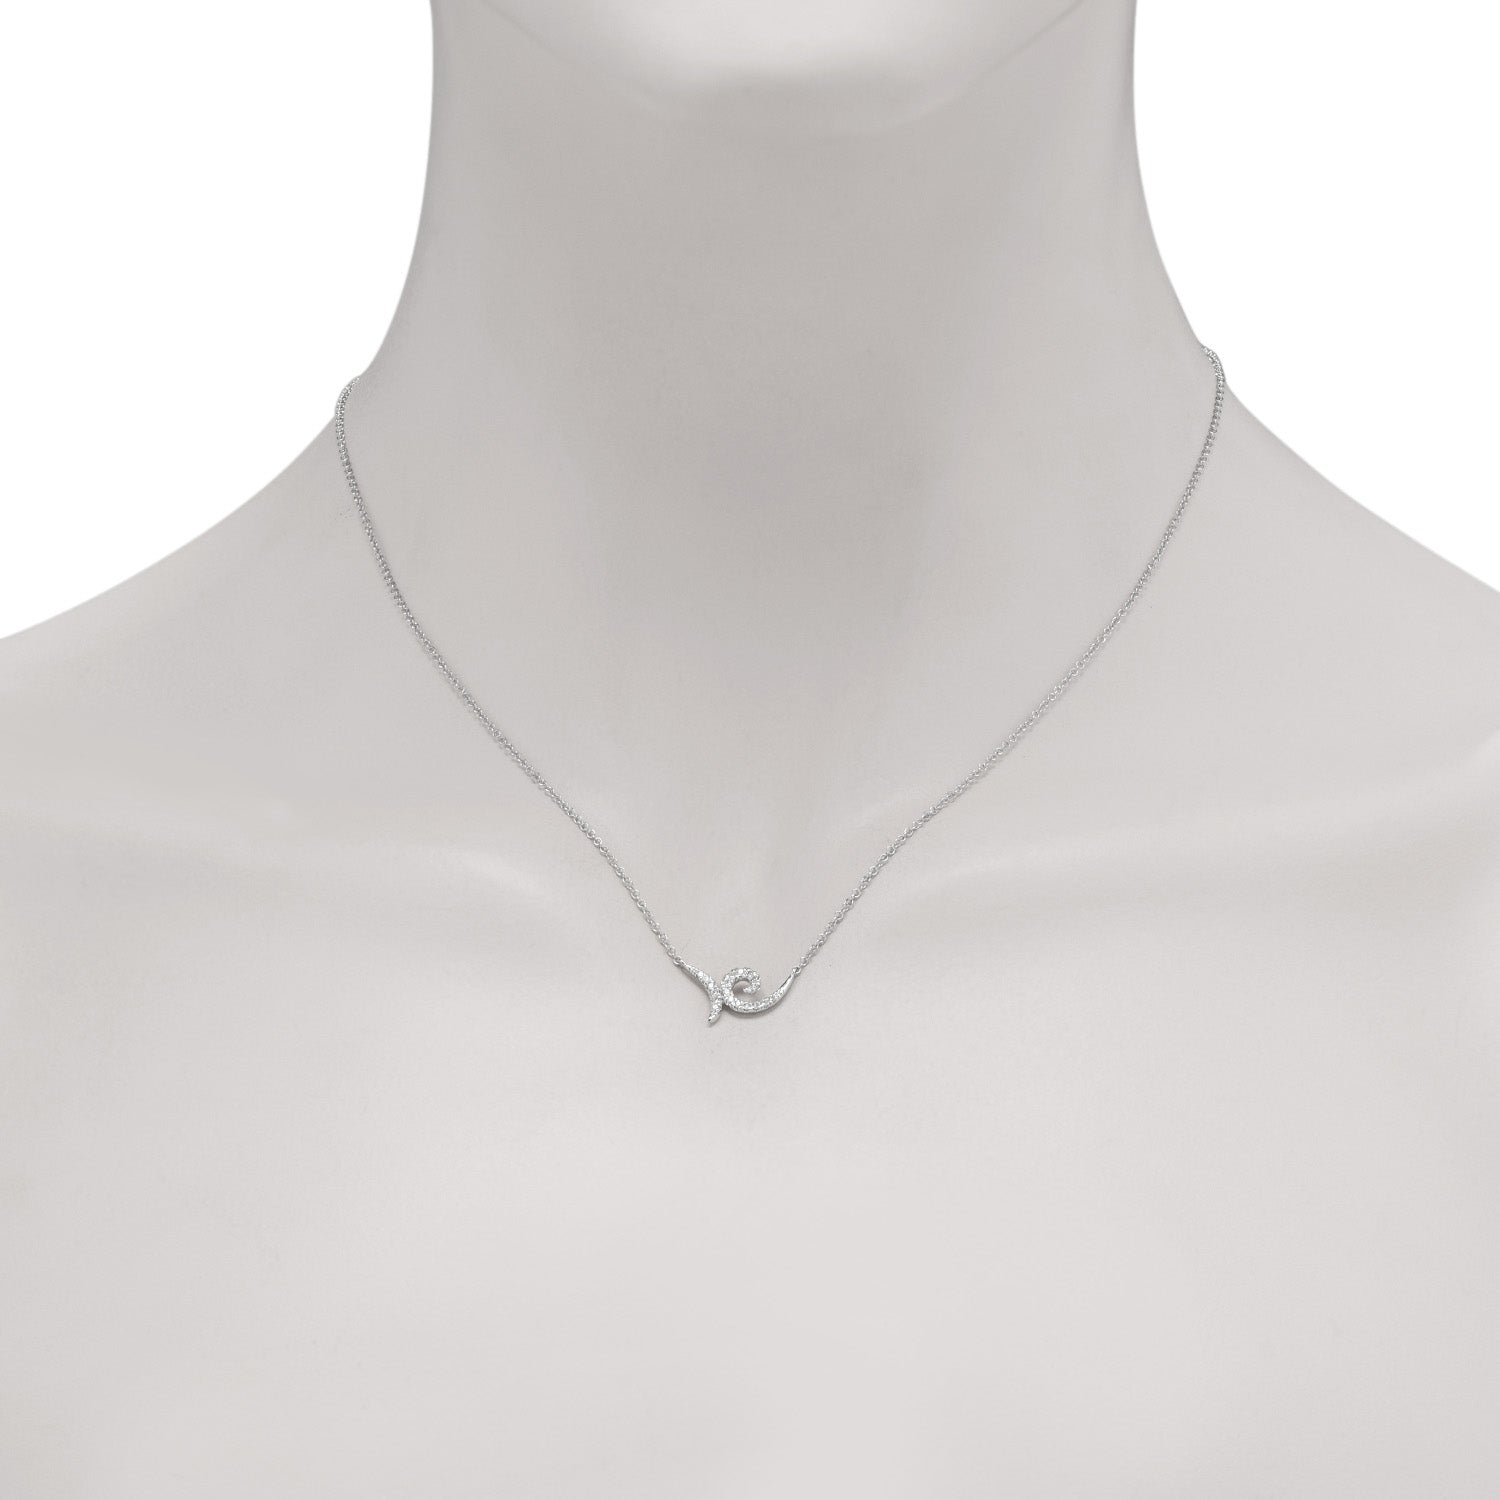 Gabriel Diamond Fashion Necklace in 14kt White Gold (1/10ct tw)